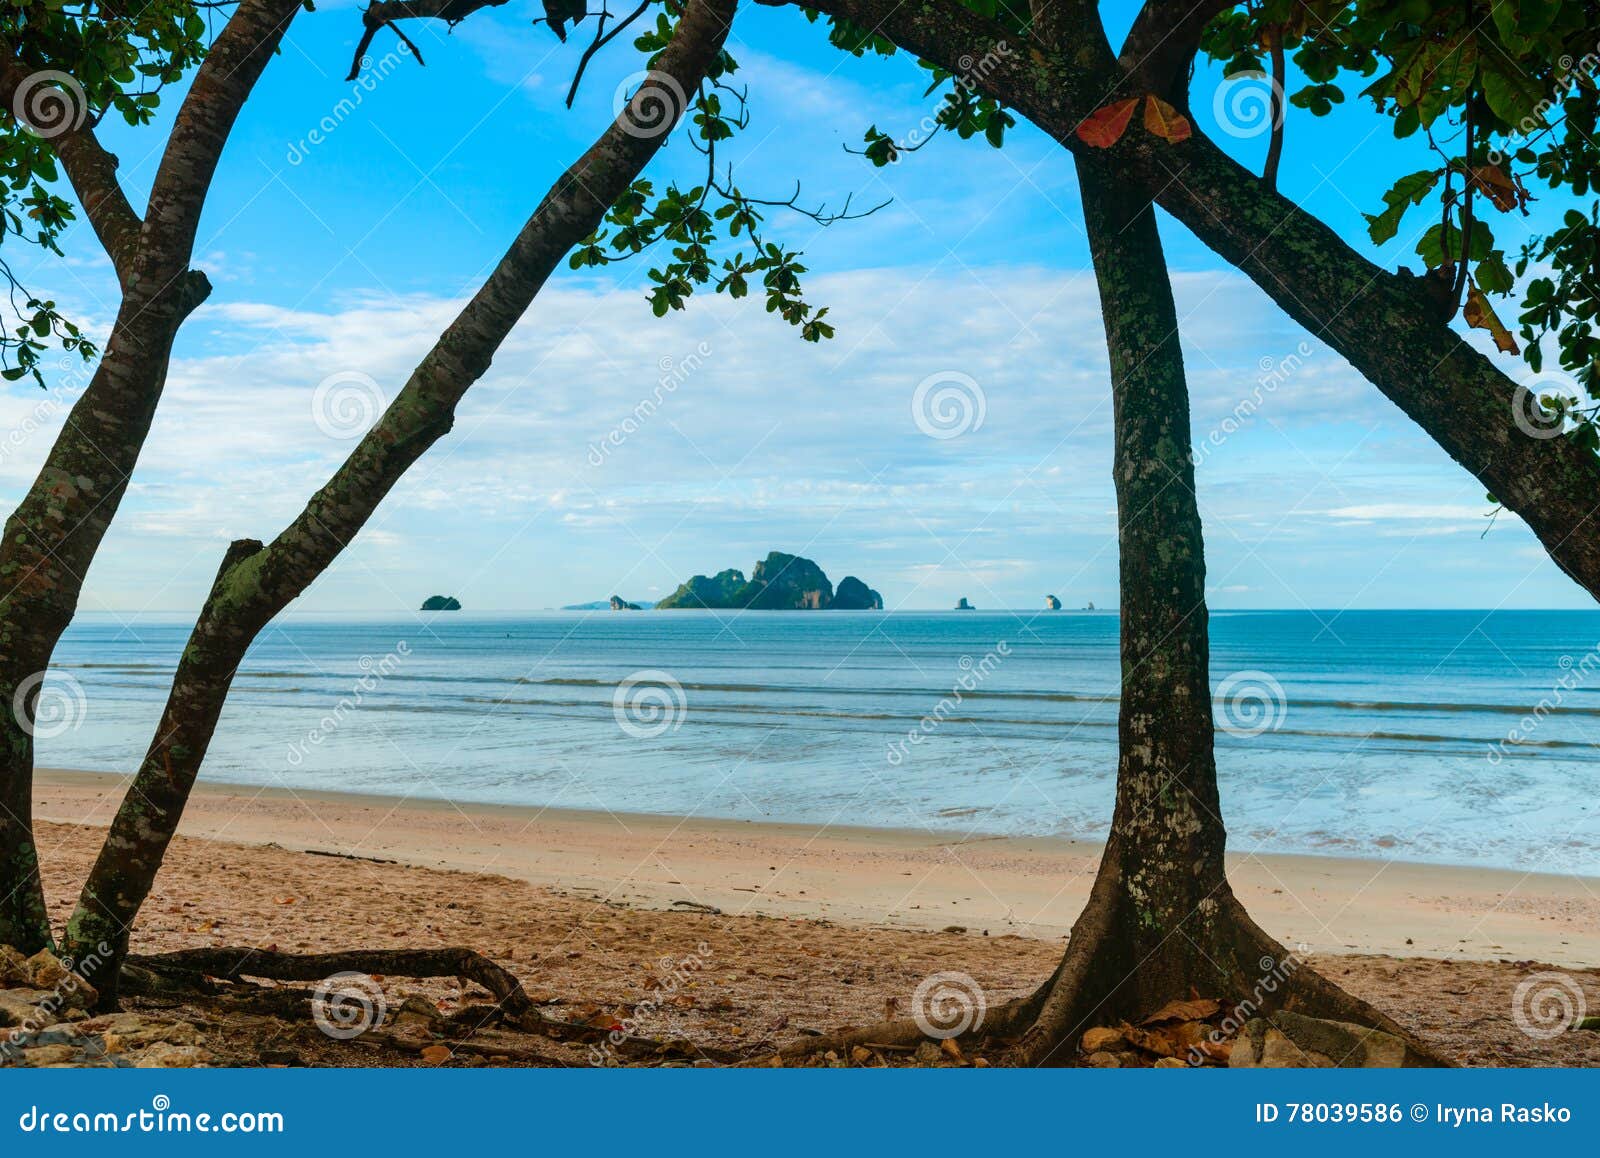 island off ao nang beach krabi, thailand